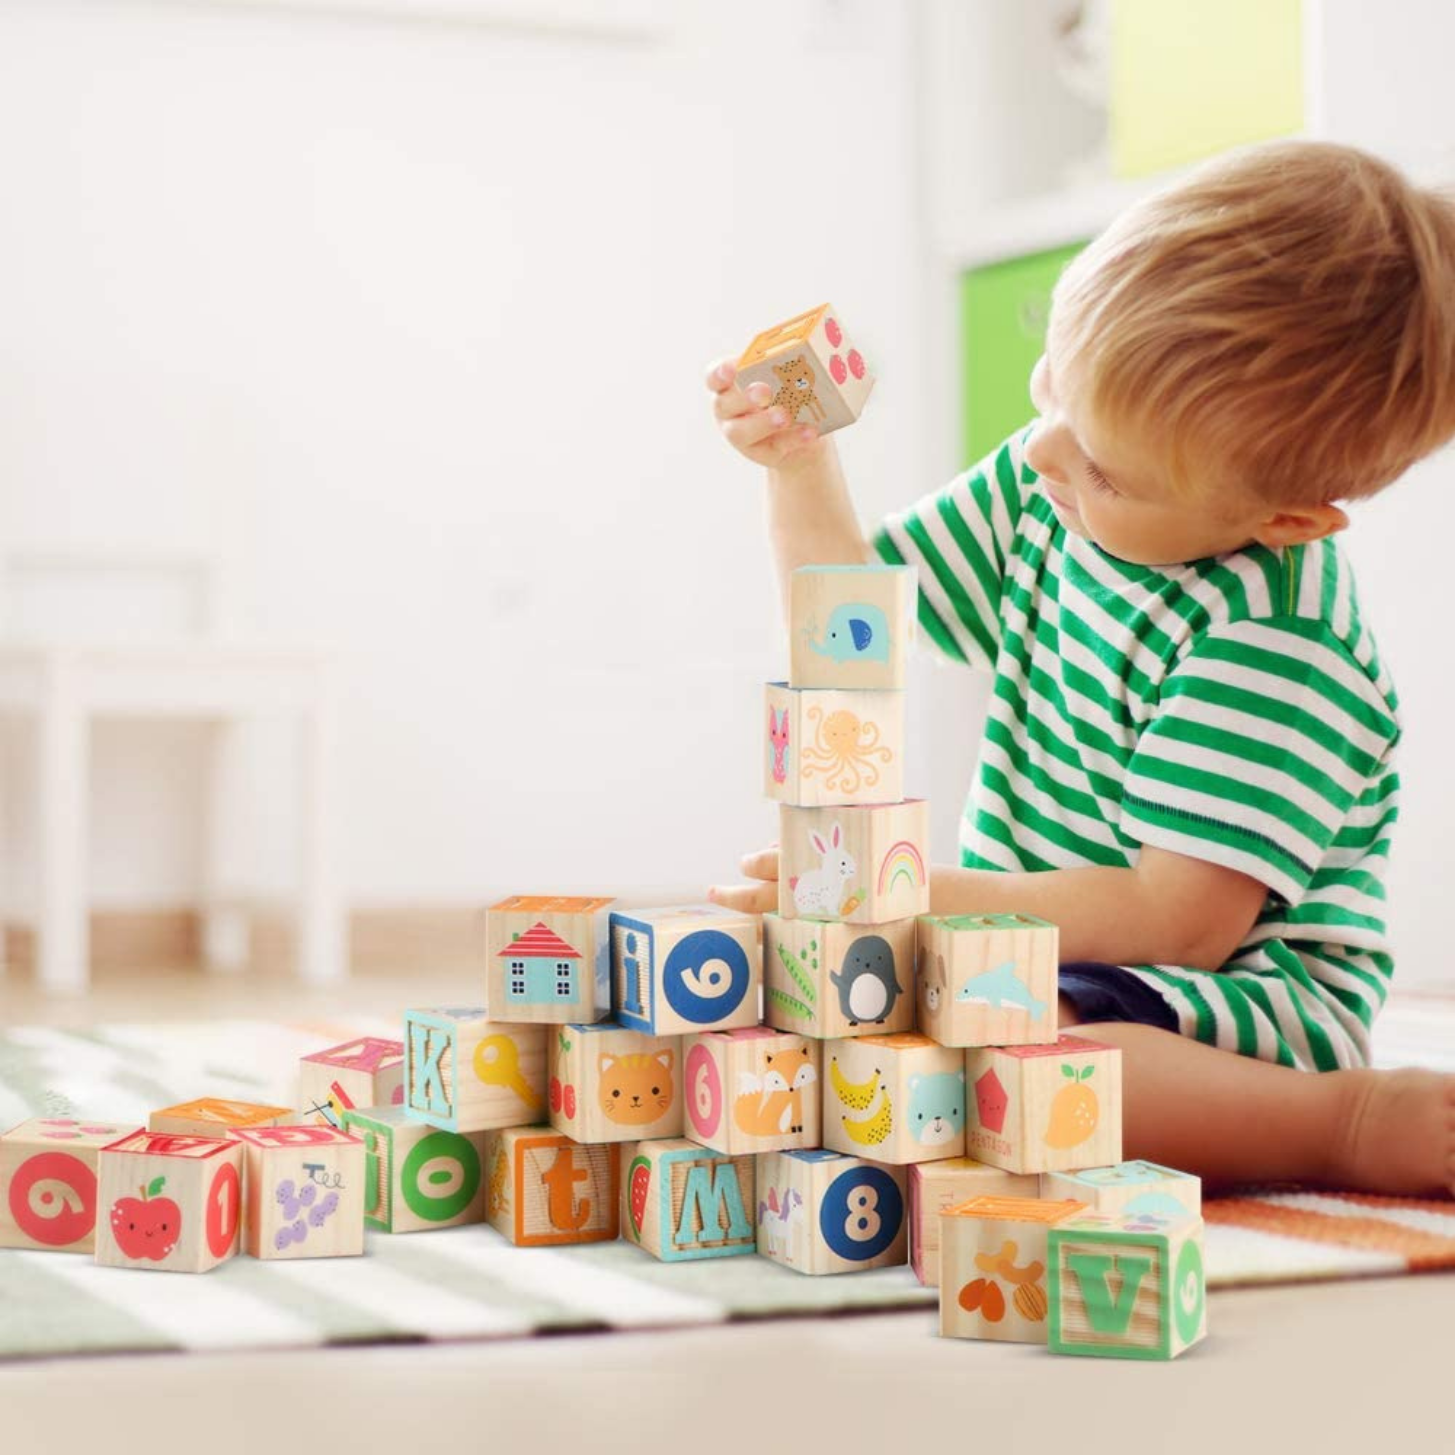 Sensorii's build and play- Boy building with Sensorii's alphabet blocks